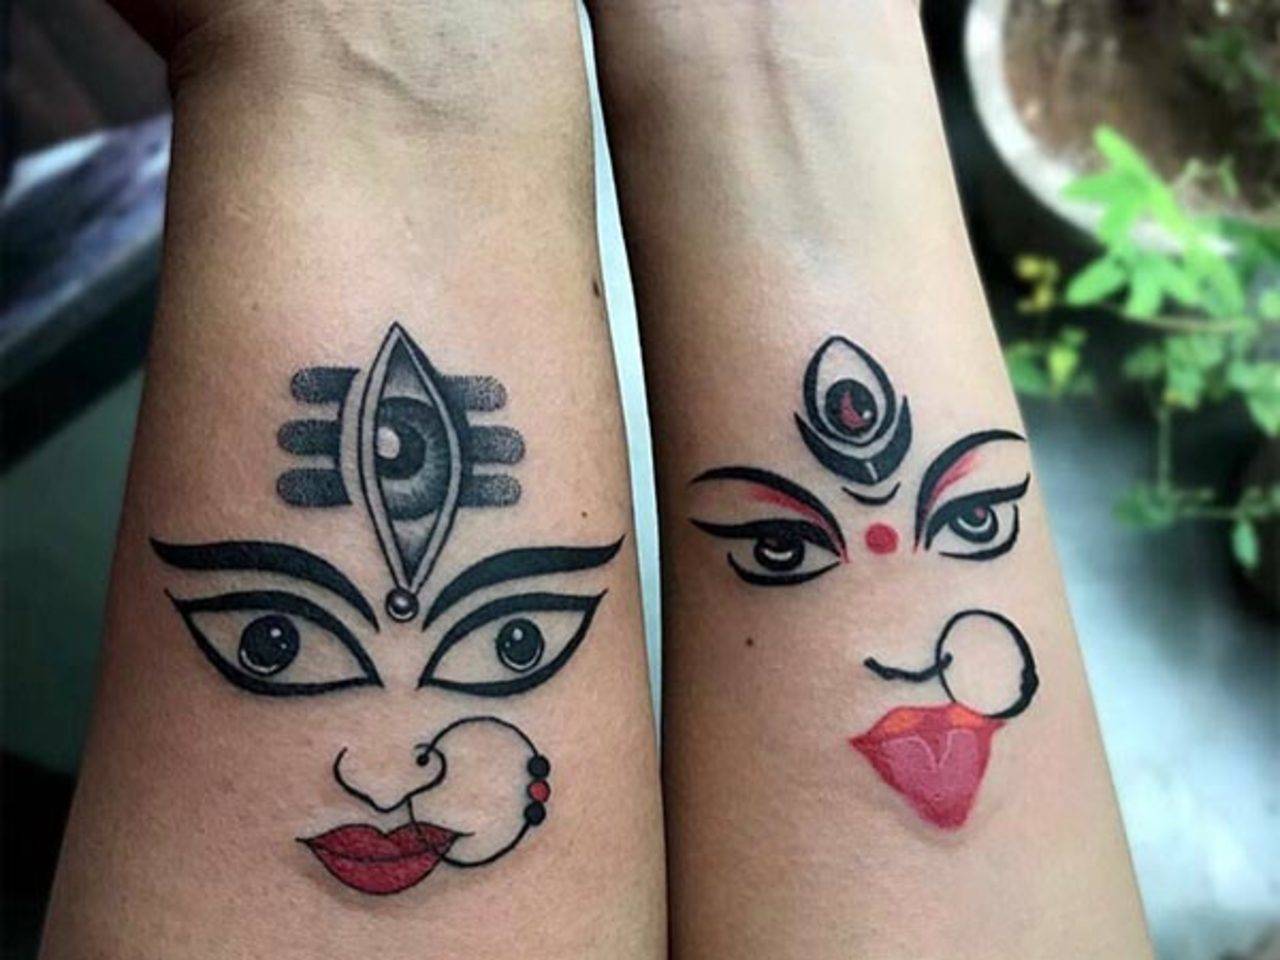 Aggregate 76 allu arjun tattoo photos latest  incdgdbentre